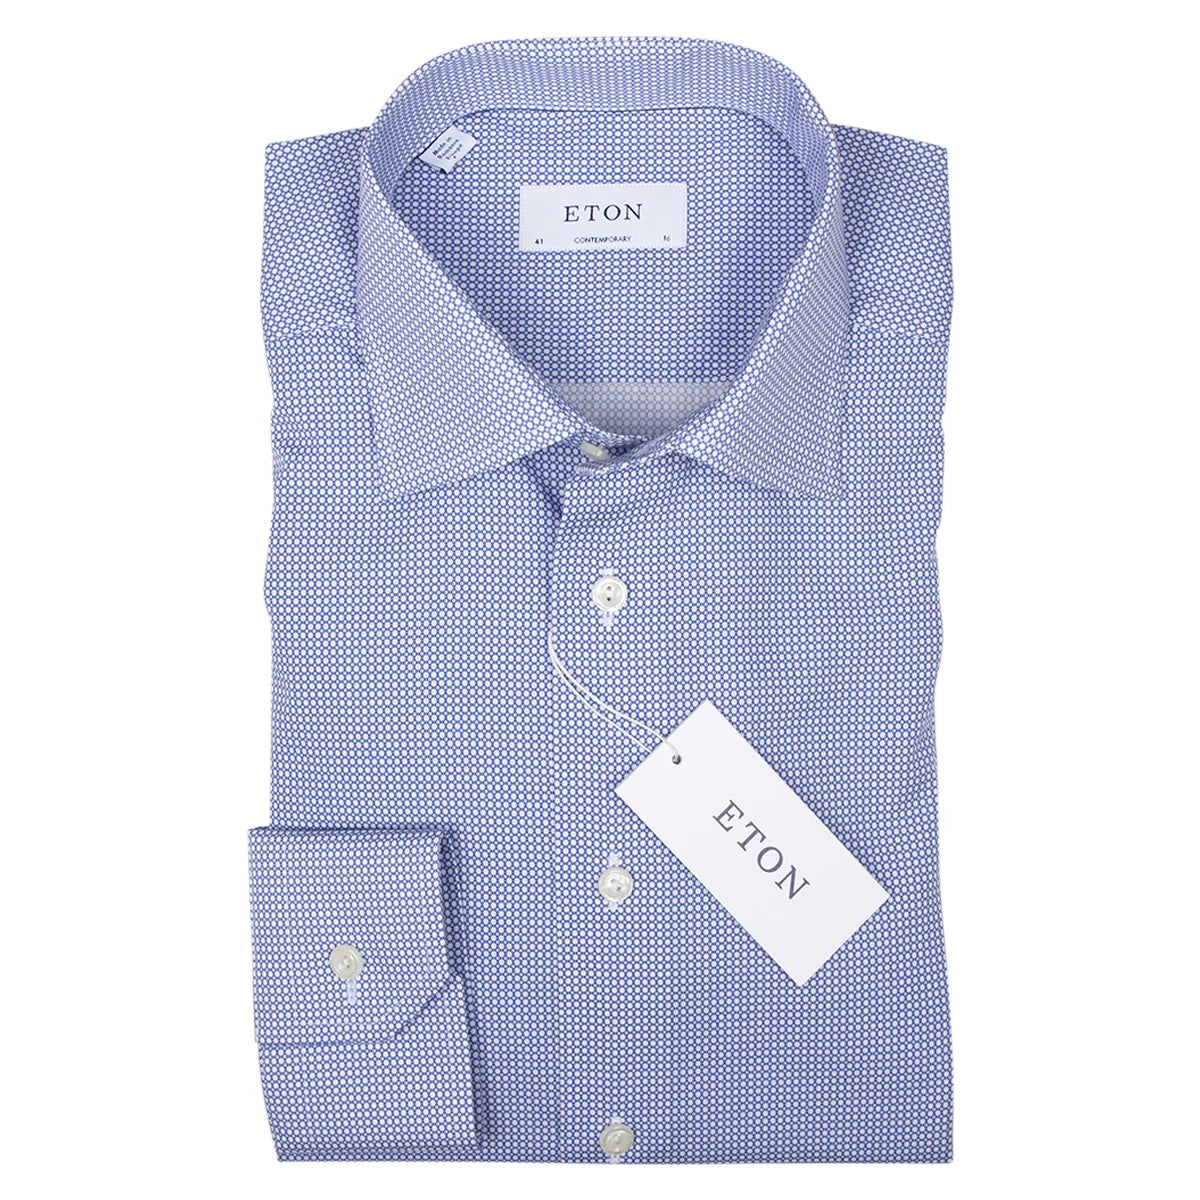 ETON Overhemd blauw met wit | Contemporary